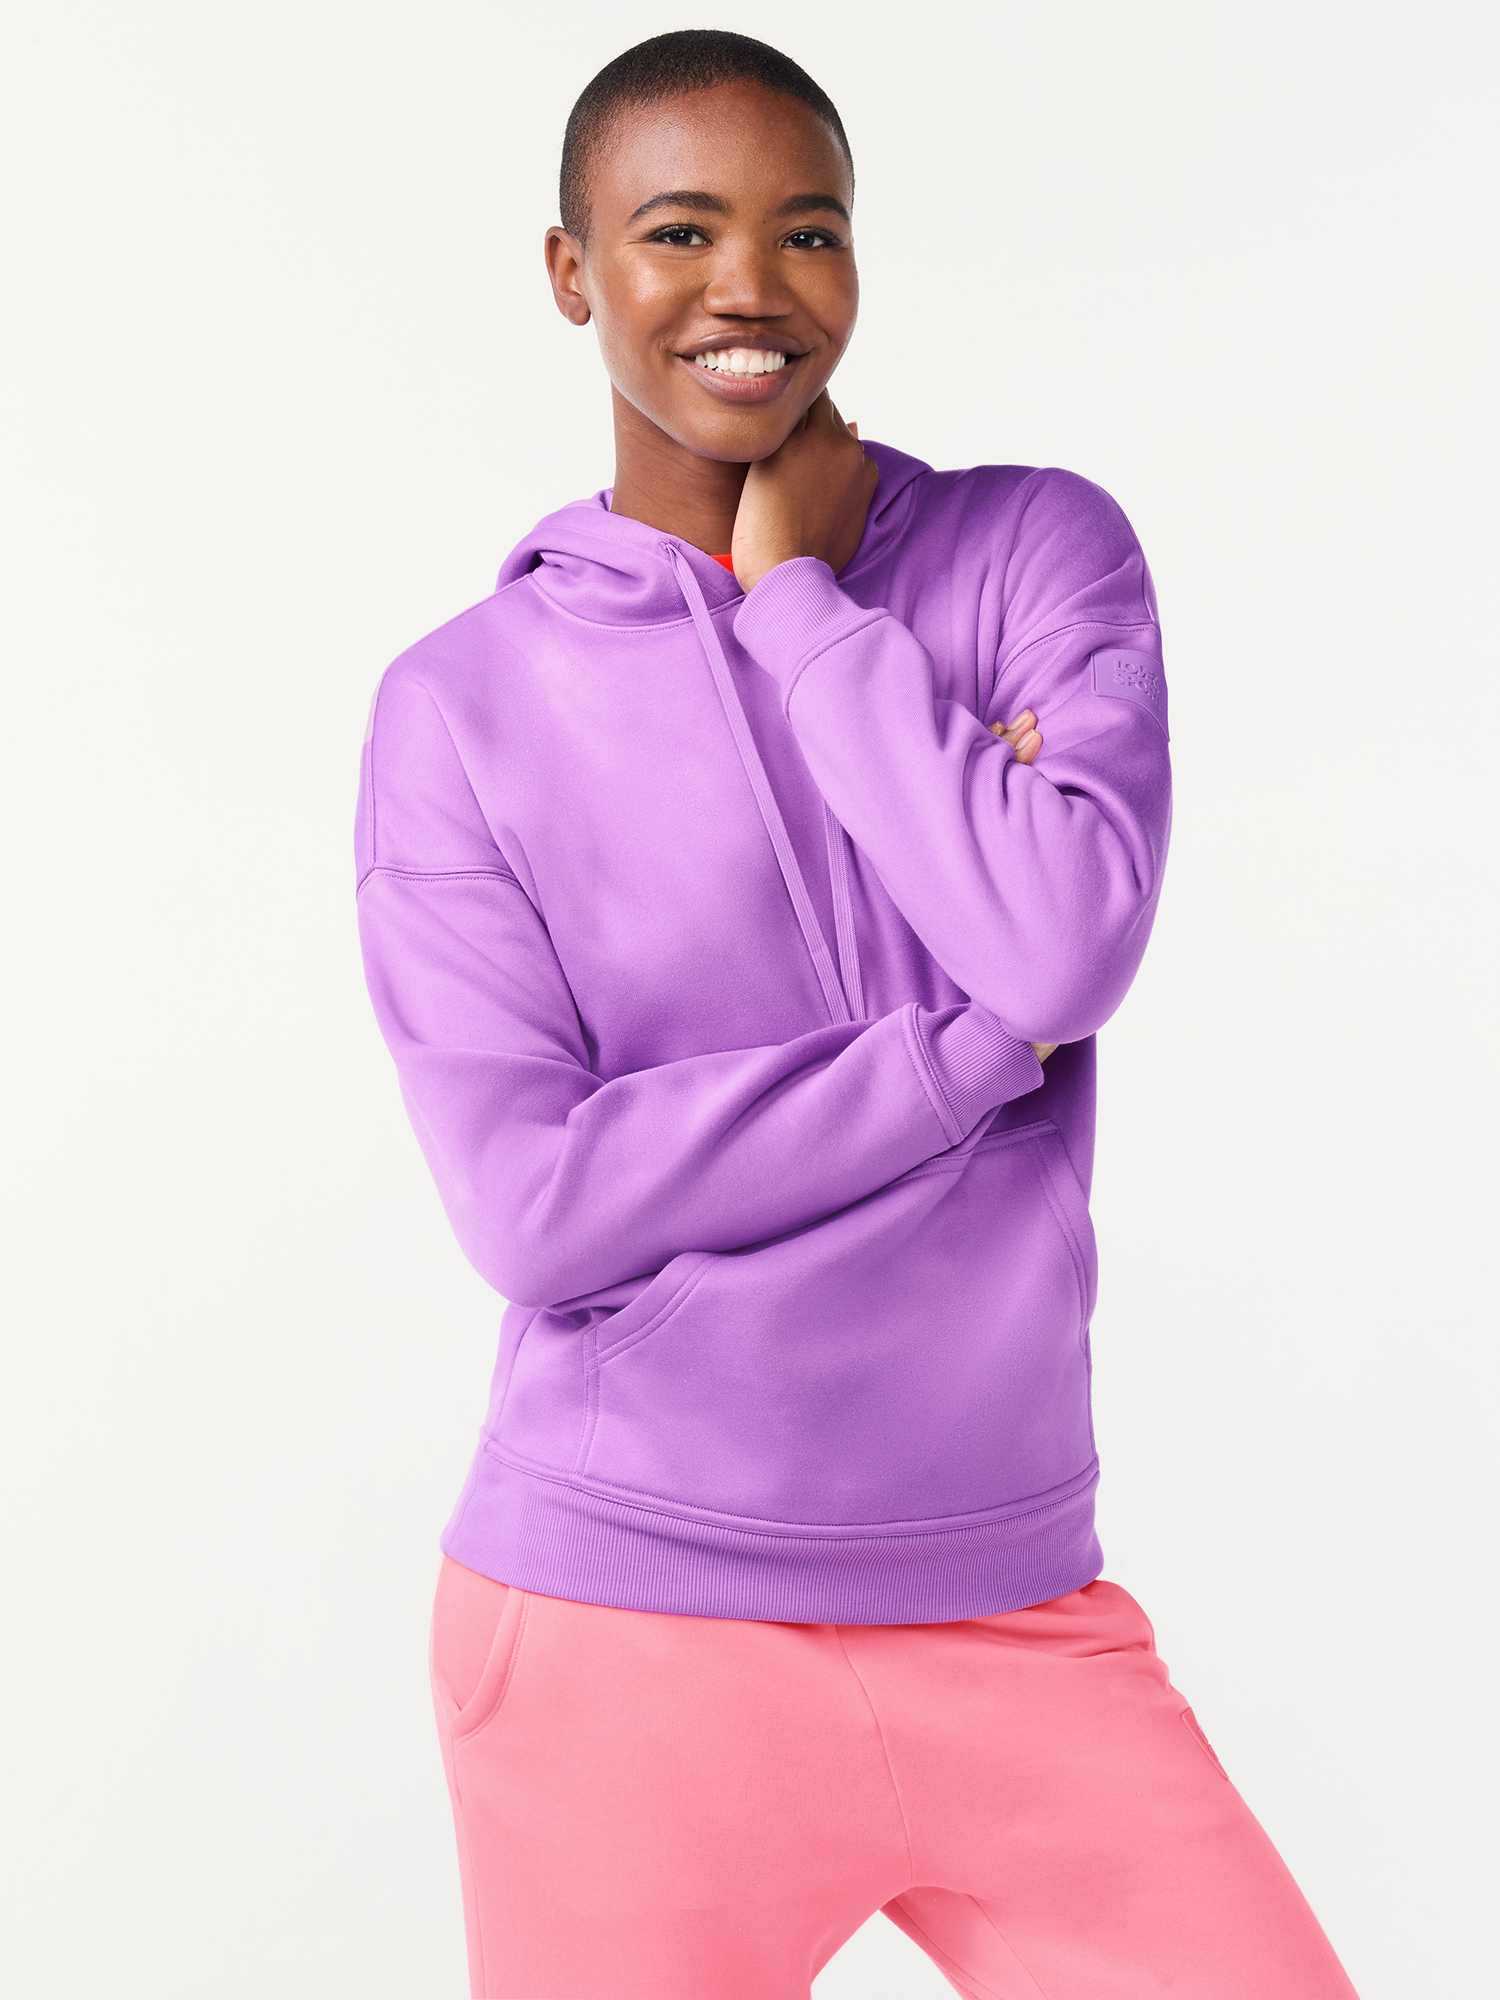 Love & Sports All Gender Fleece Hoodie Sweatshirt - image 3 of 7